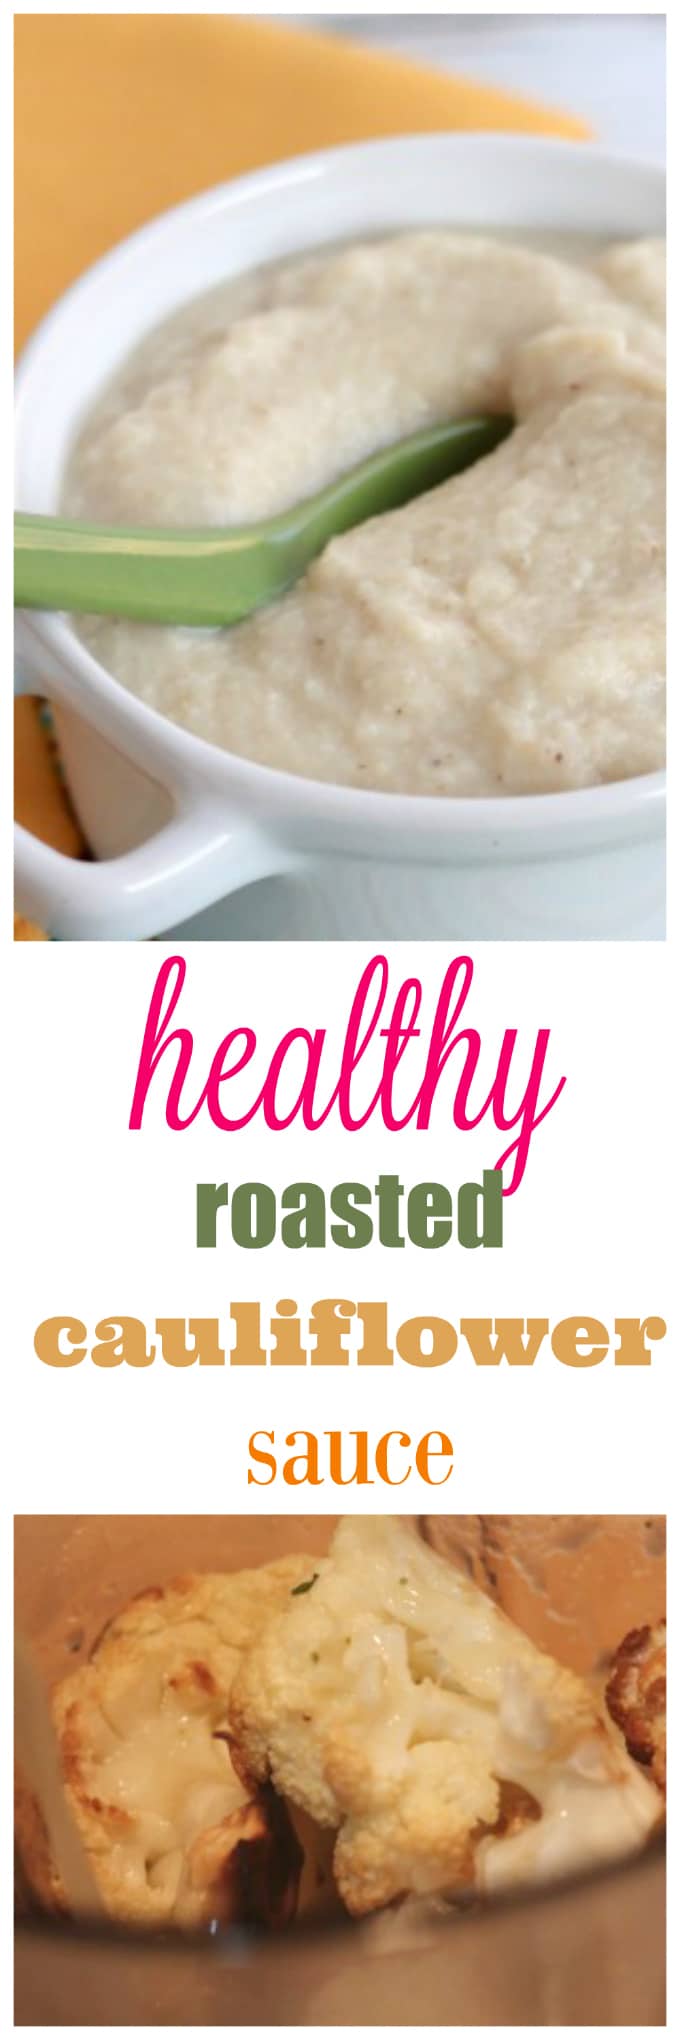 healthy roasted cauliflower sauce recipe @createdbydiane